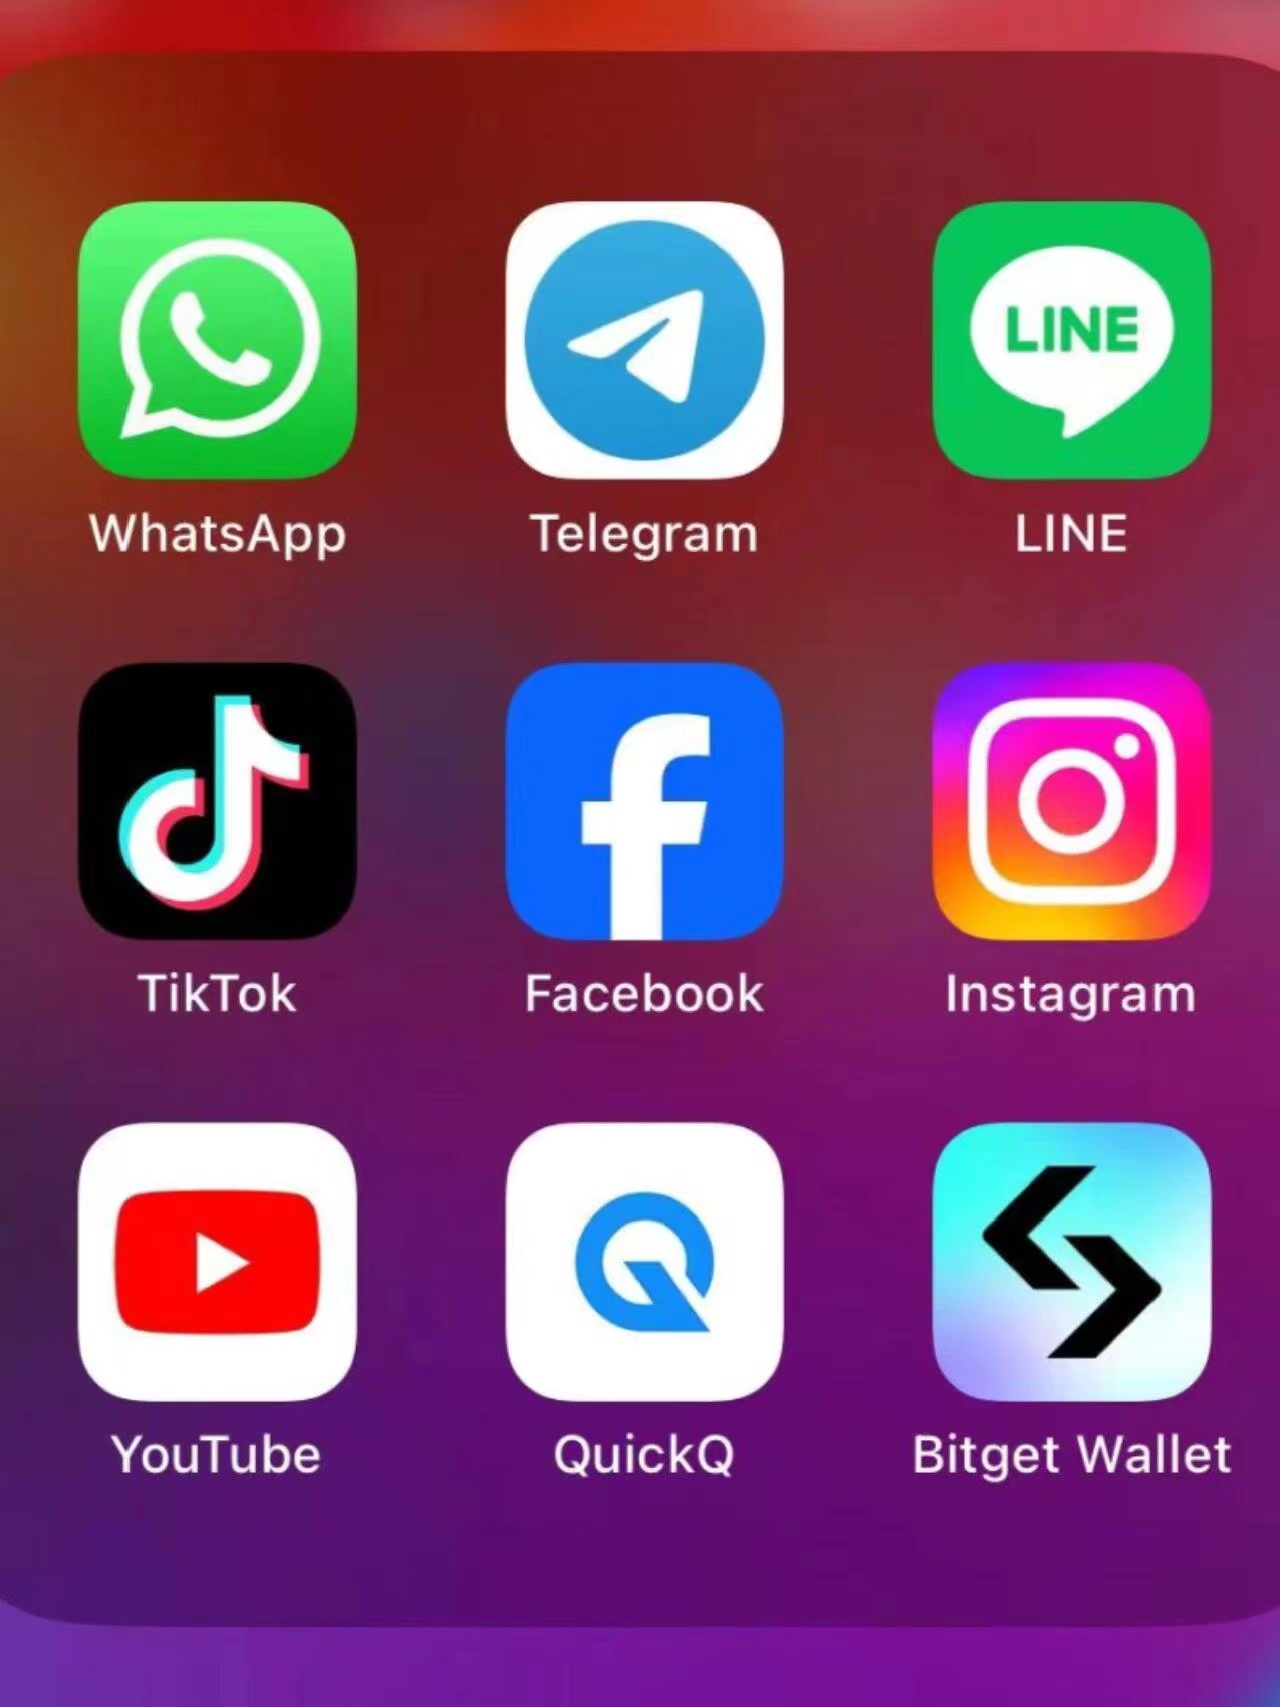 Whats App营销在国际贸易中的应用